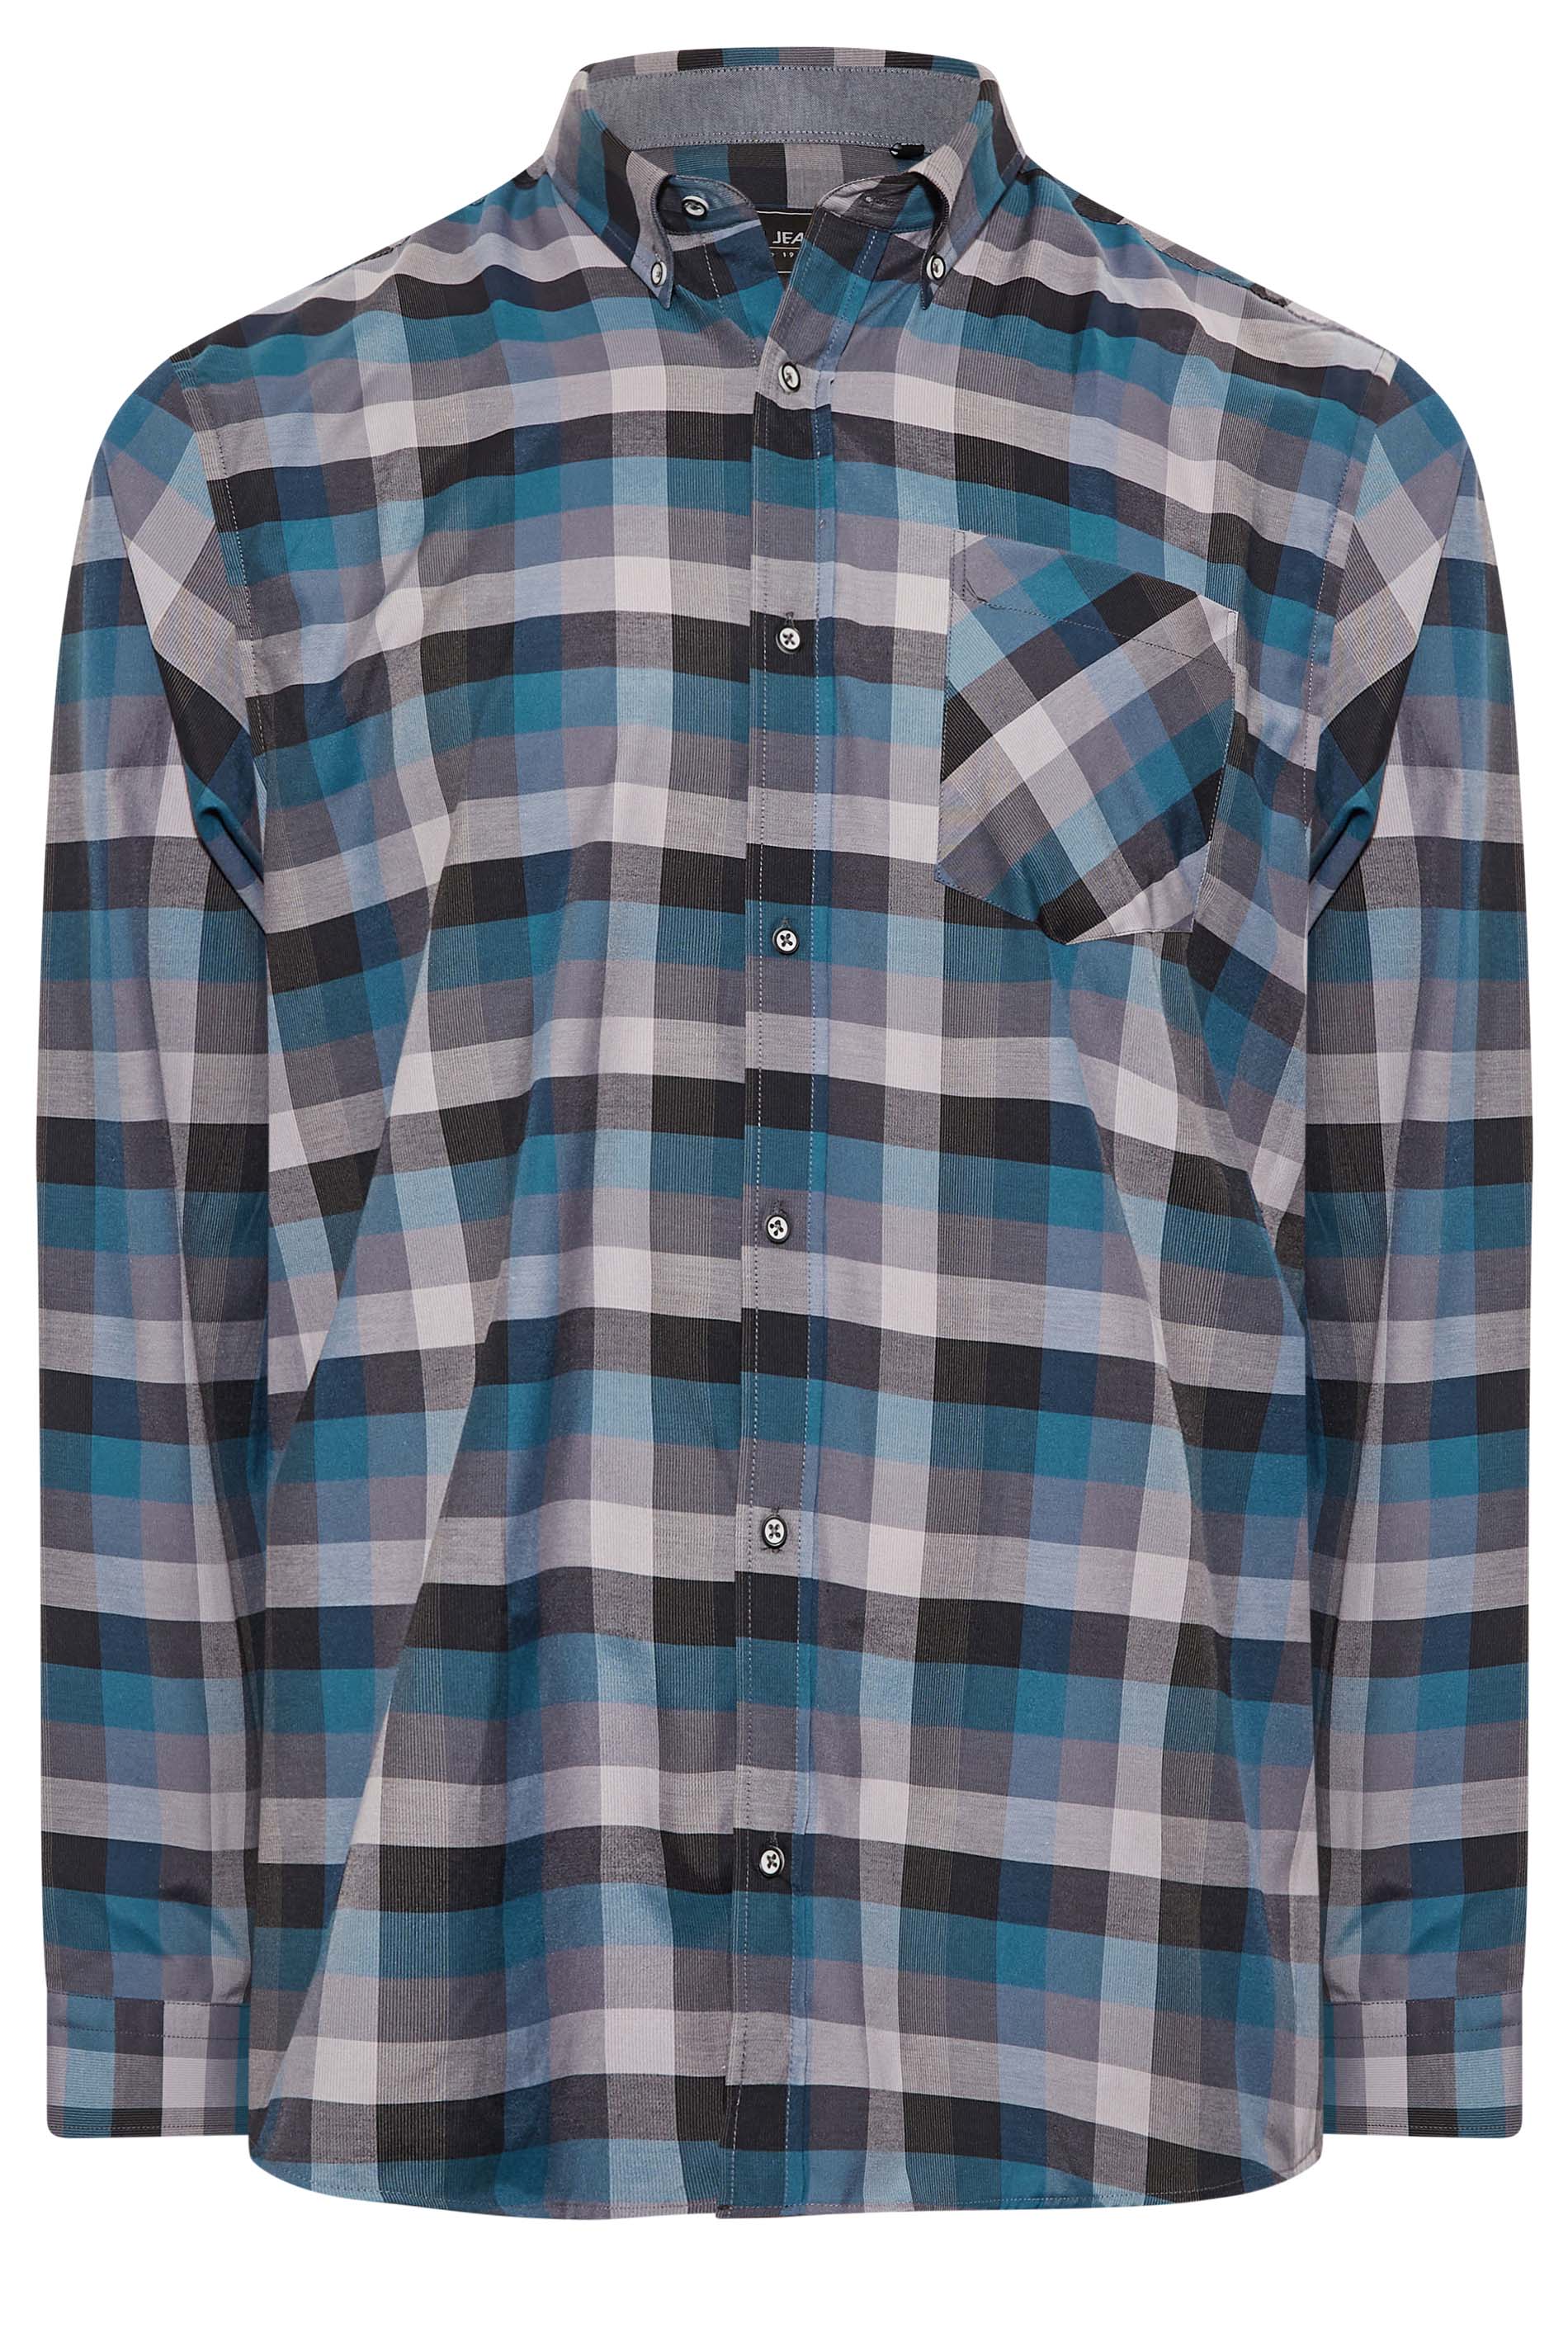 KAM Big & Tall Turquoise Blue Long Sleeve Check Shirt | BadRhino 1